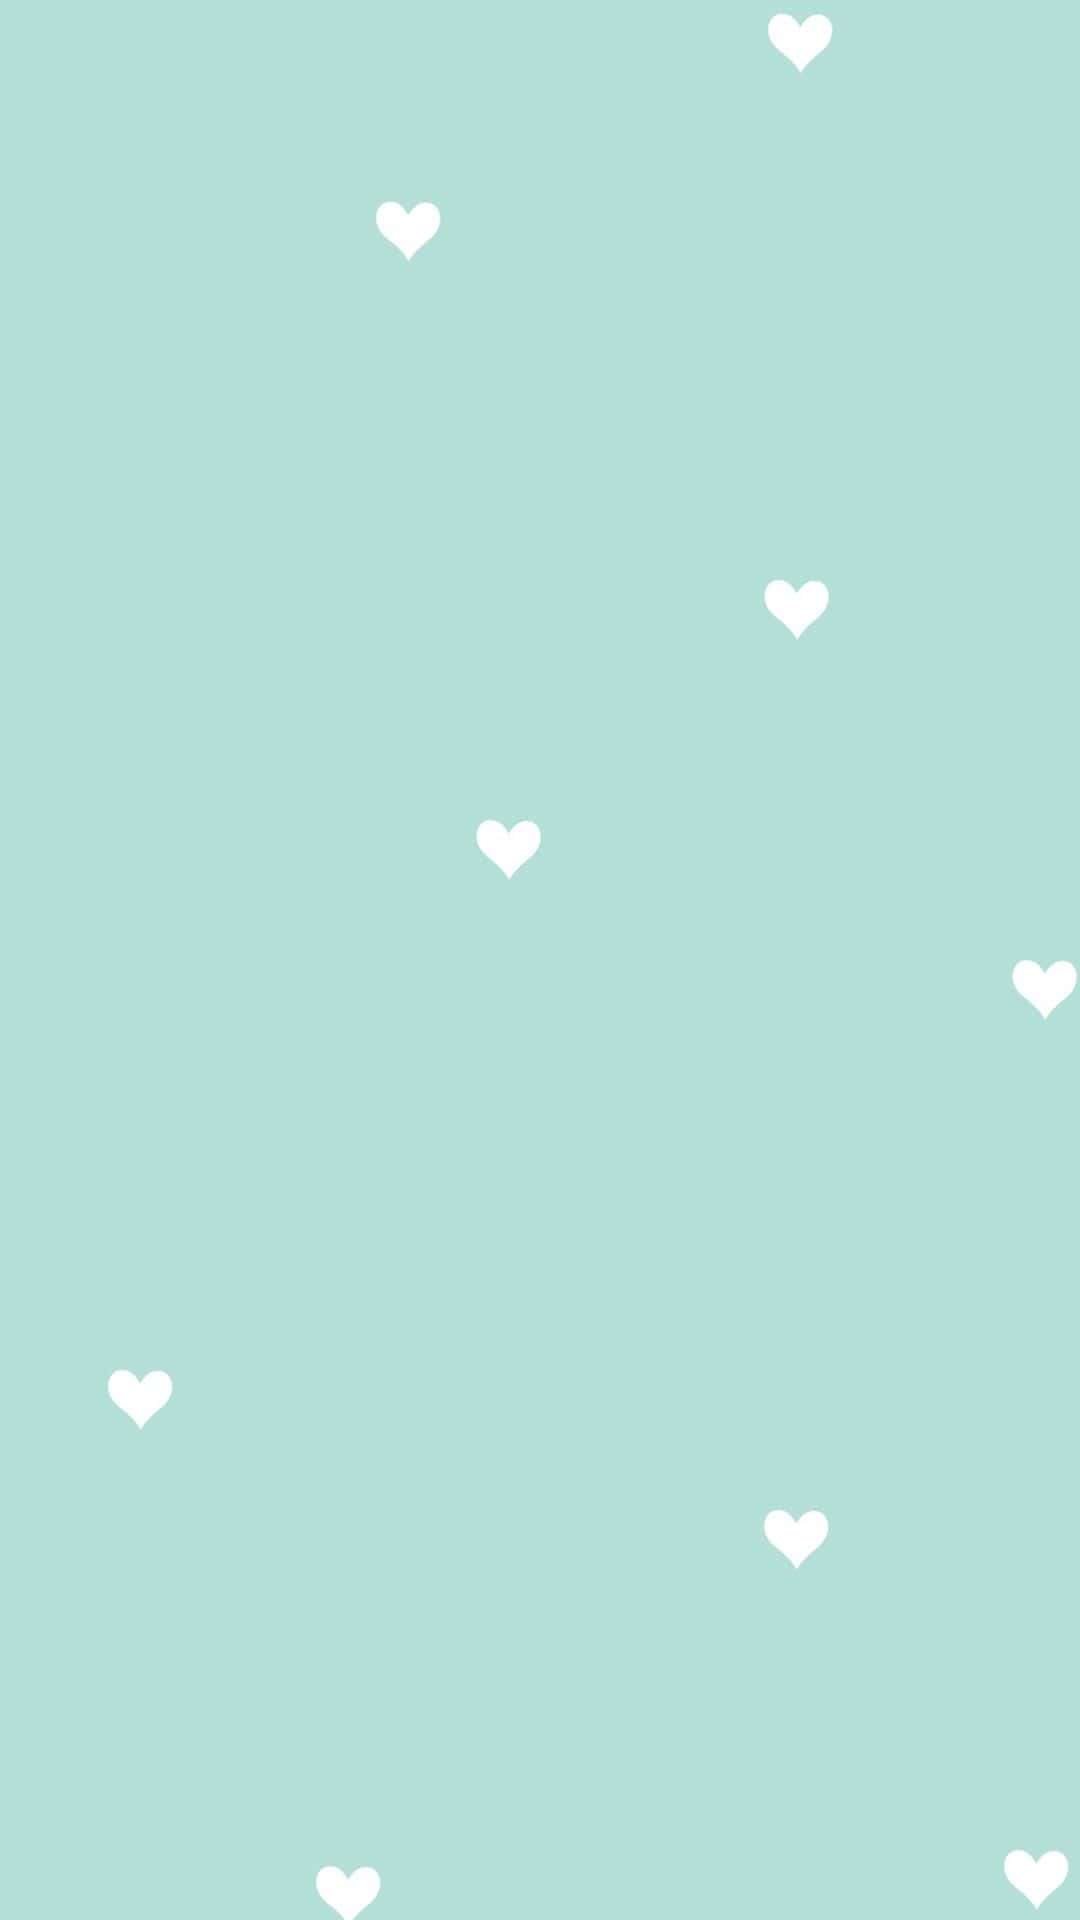 Download Heart Cute Mint Green Aesthetic Wallpaper | Wallpapers.com